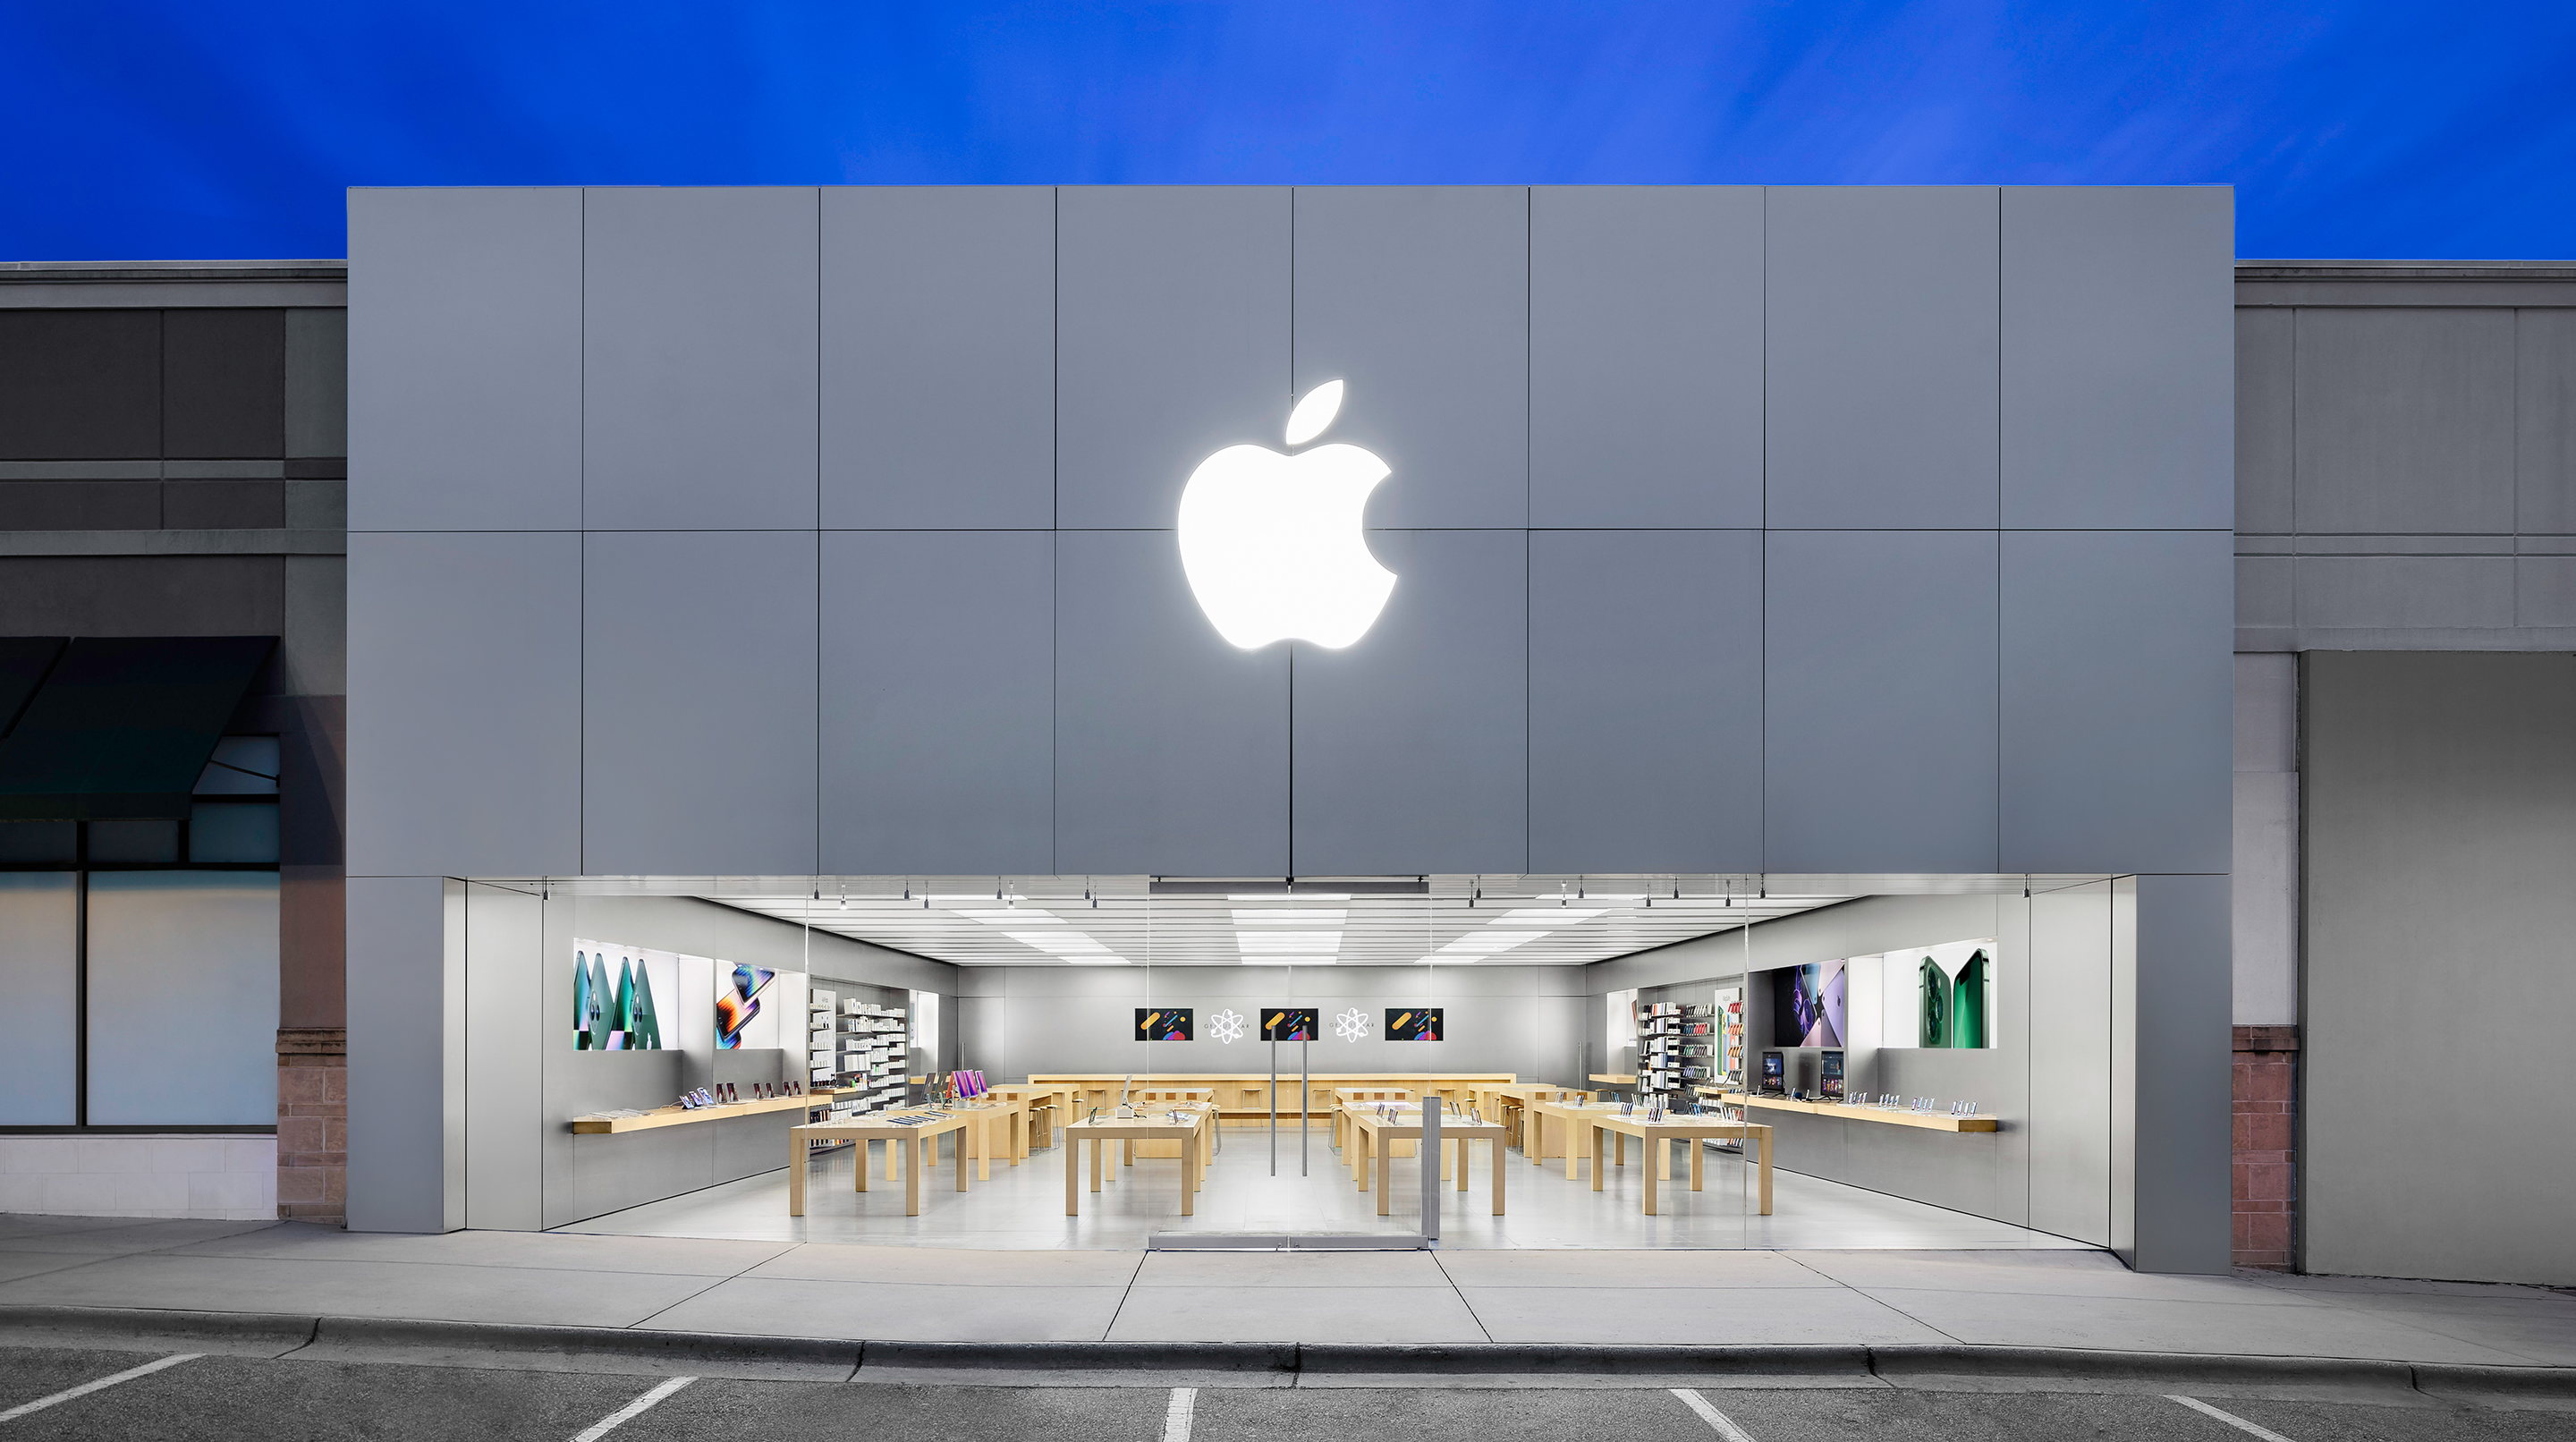 Apple Store Online - Apple